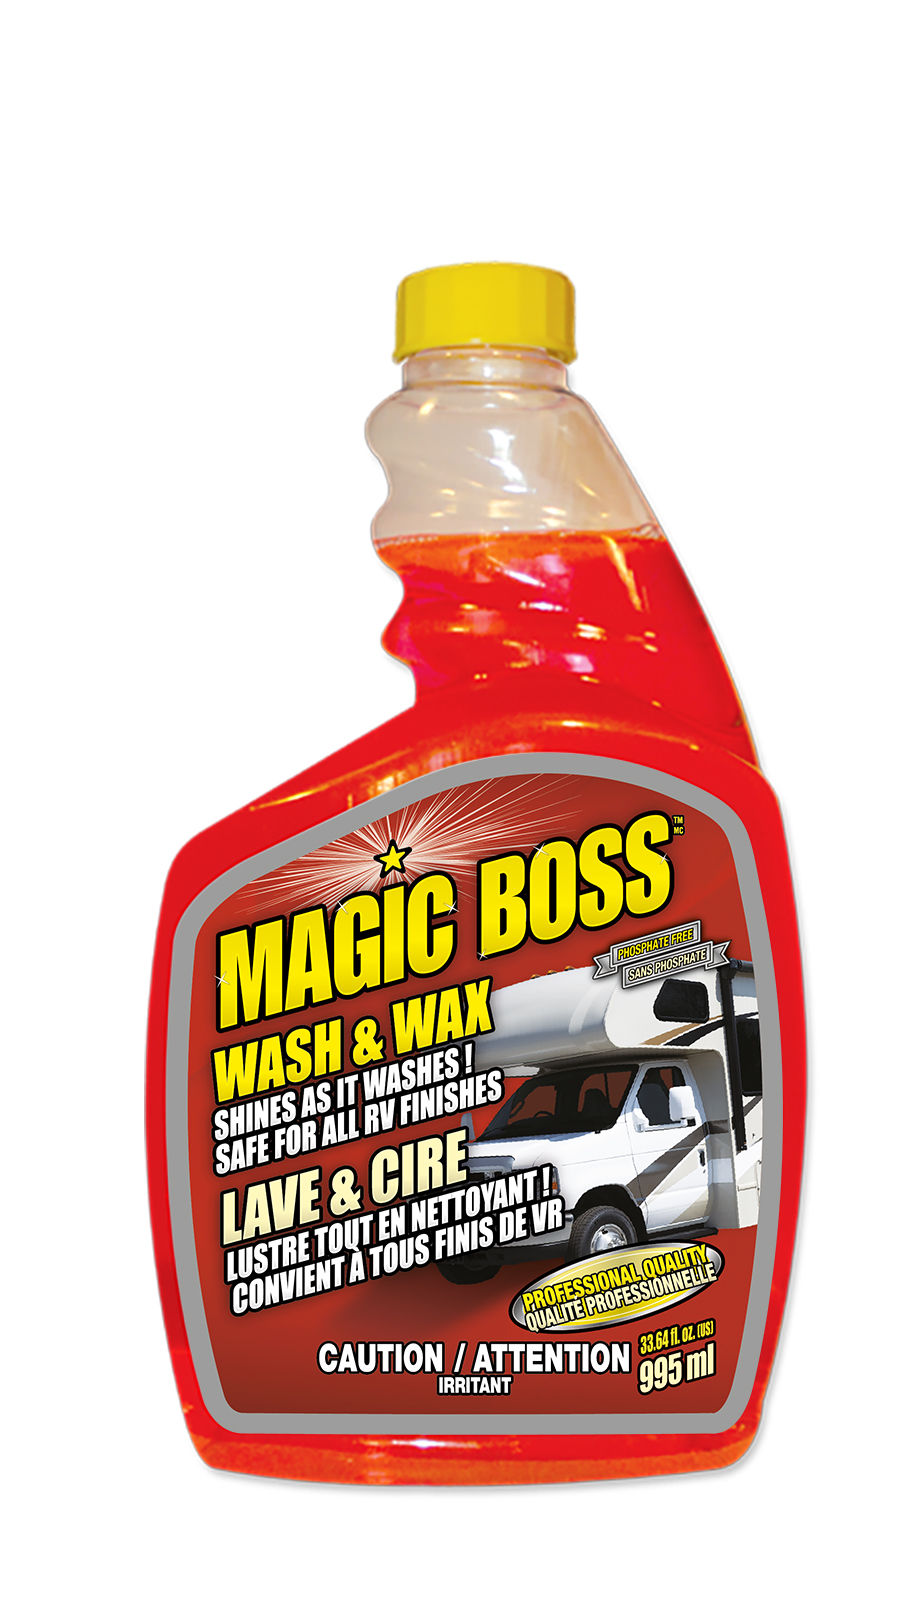 Magic Boss 1300 - Box of 12, Wash & Wax (995 ml)